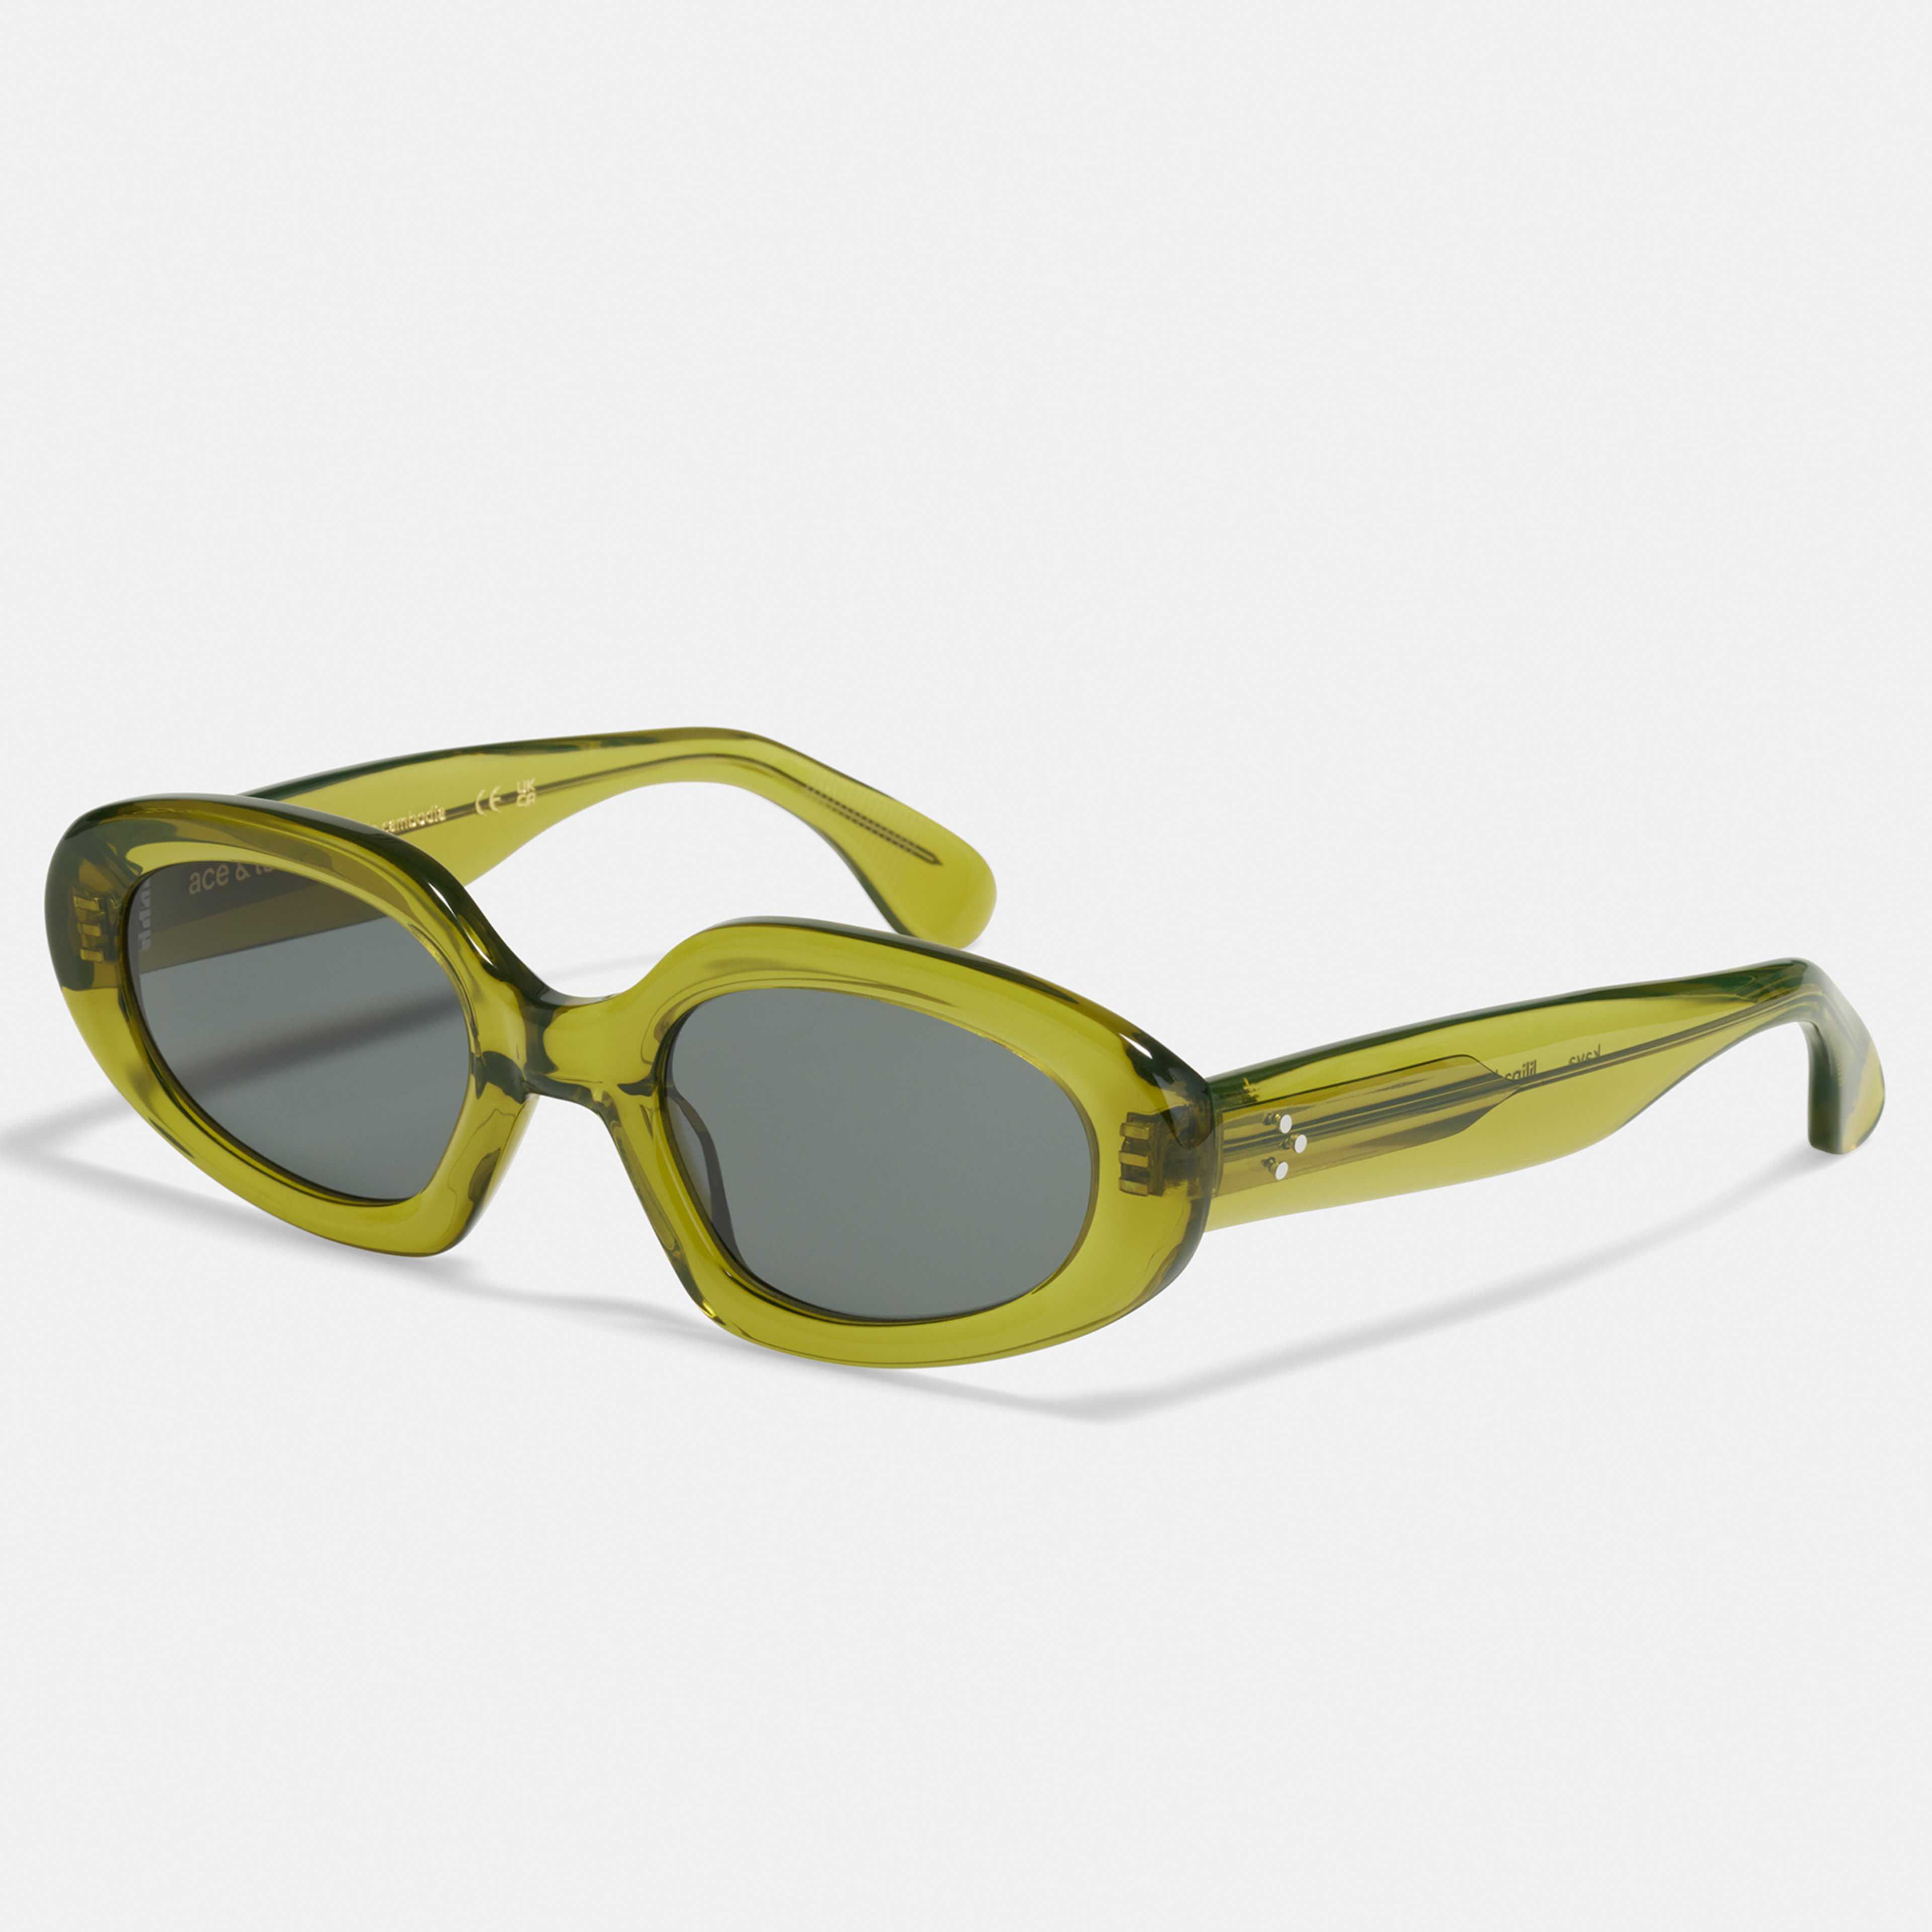 Ace & Tate Sunglasses | oval Renew bio acetate in Green